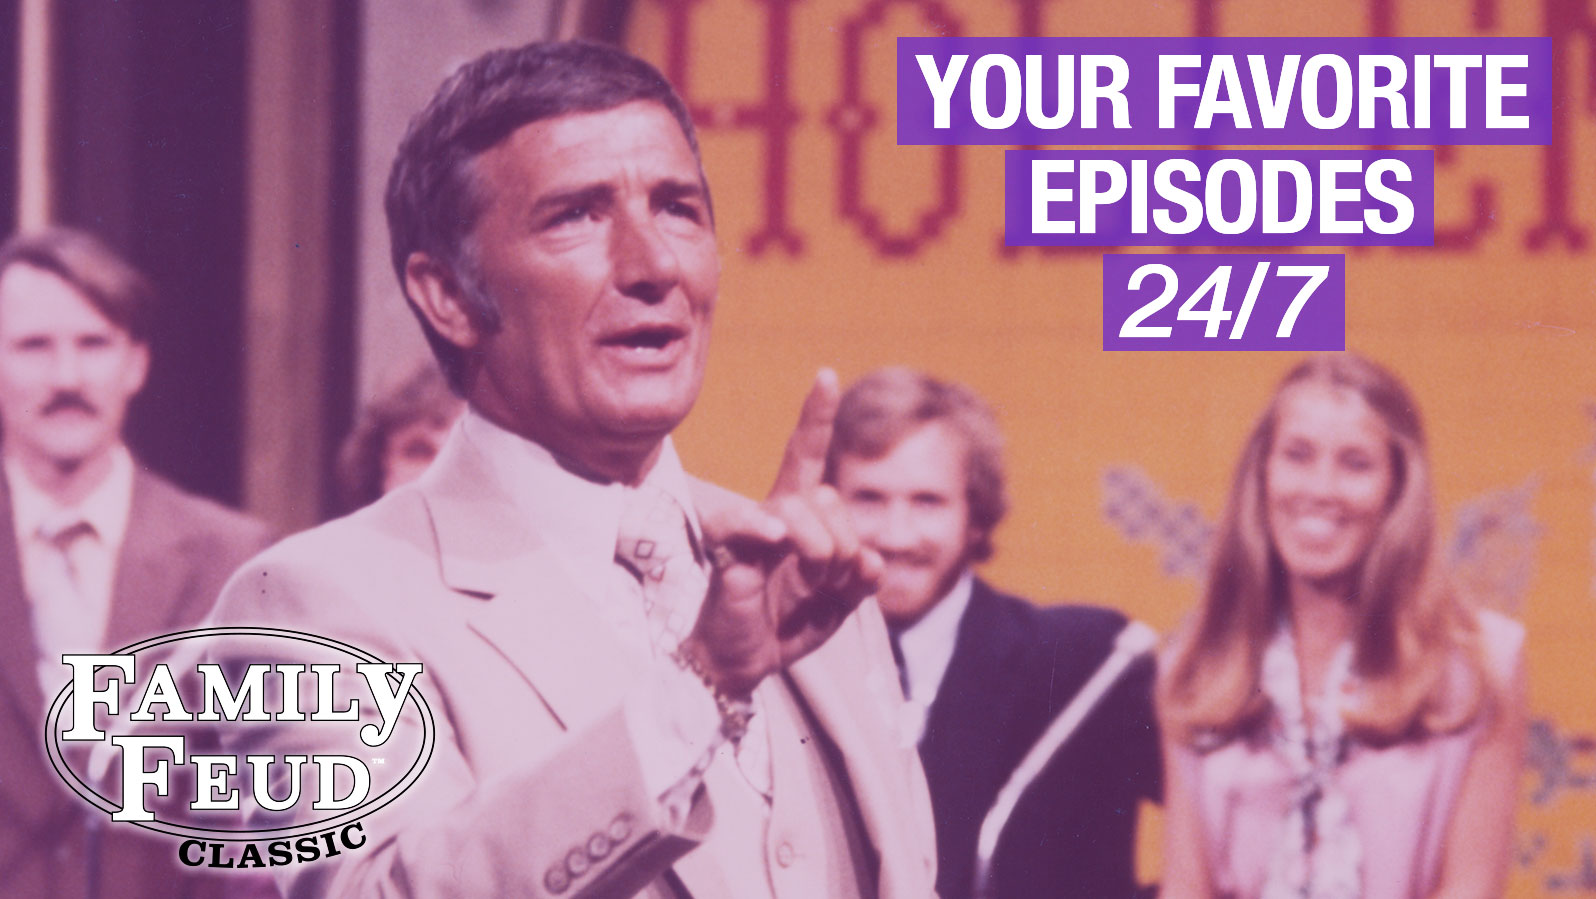 Classic Family Feud episodes now on Vizio!